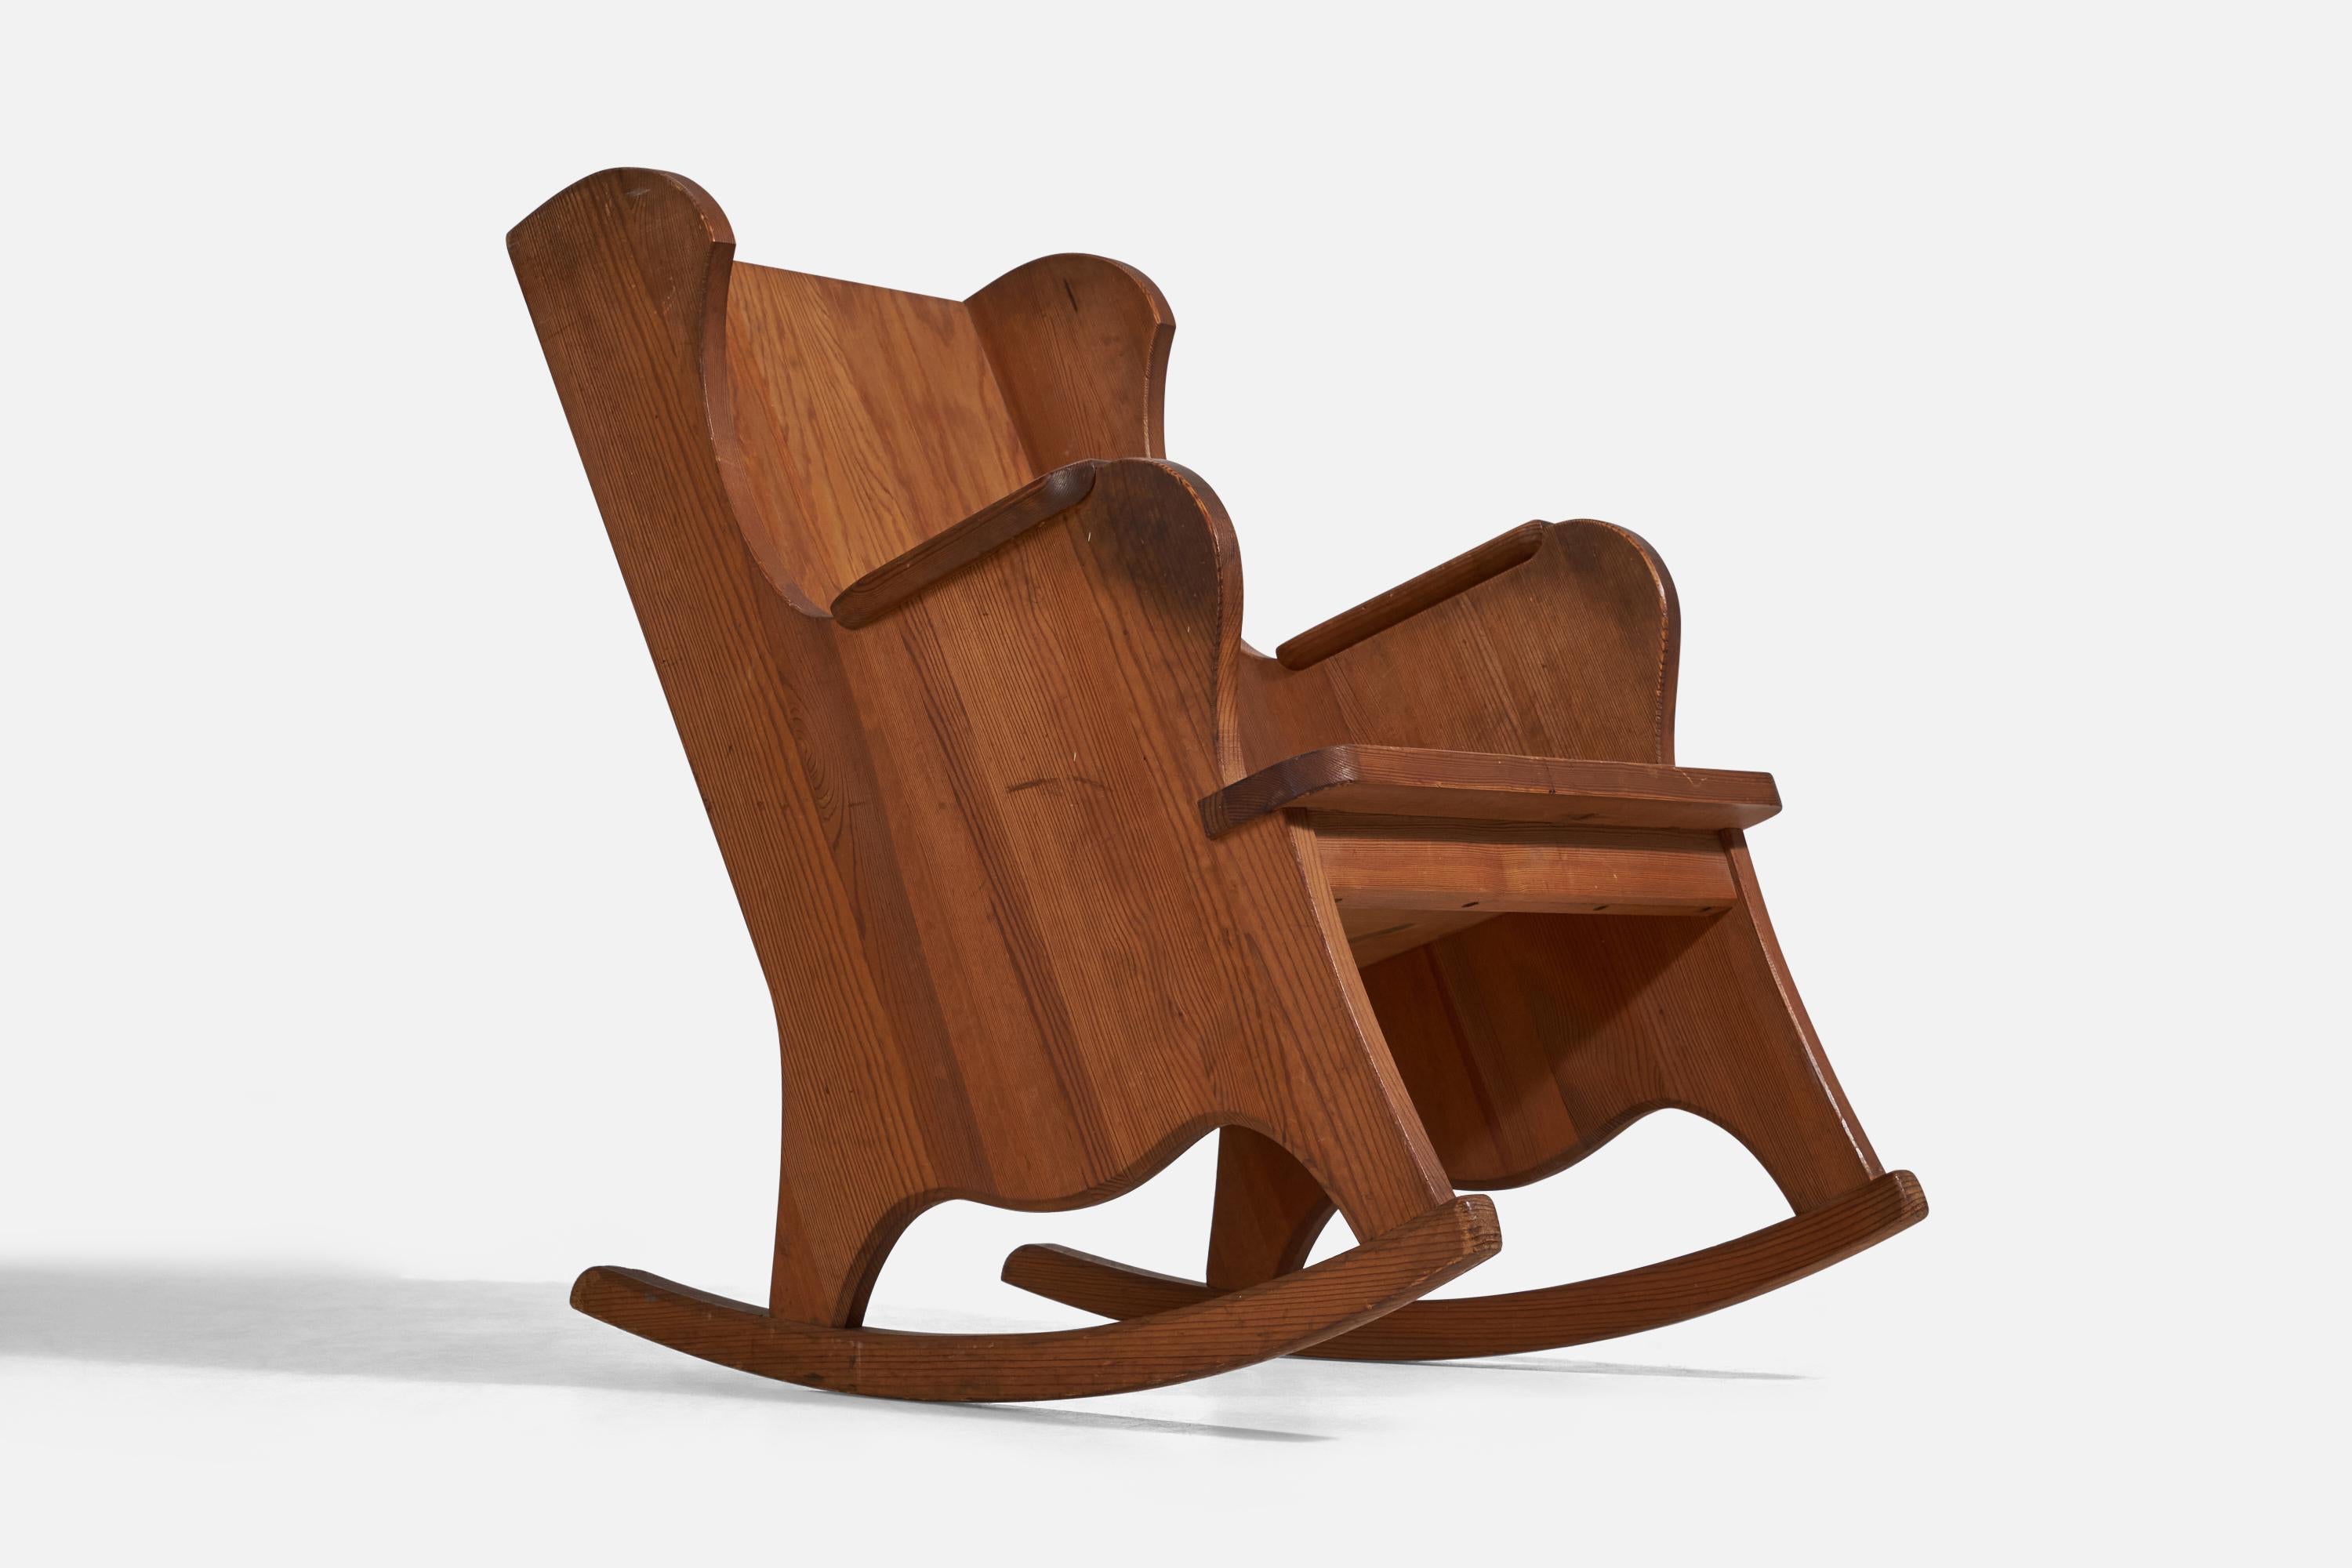 A pine rocking chair produced by Nordiska Kompaniet, Sweden, 1930s. Design attributed to Axel Einar Hjorth.